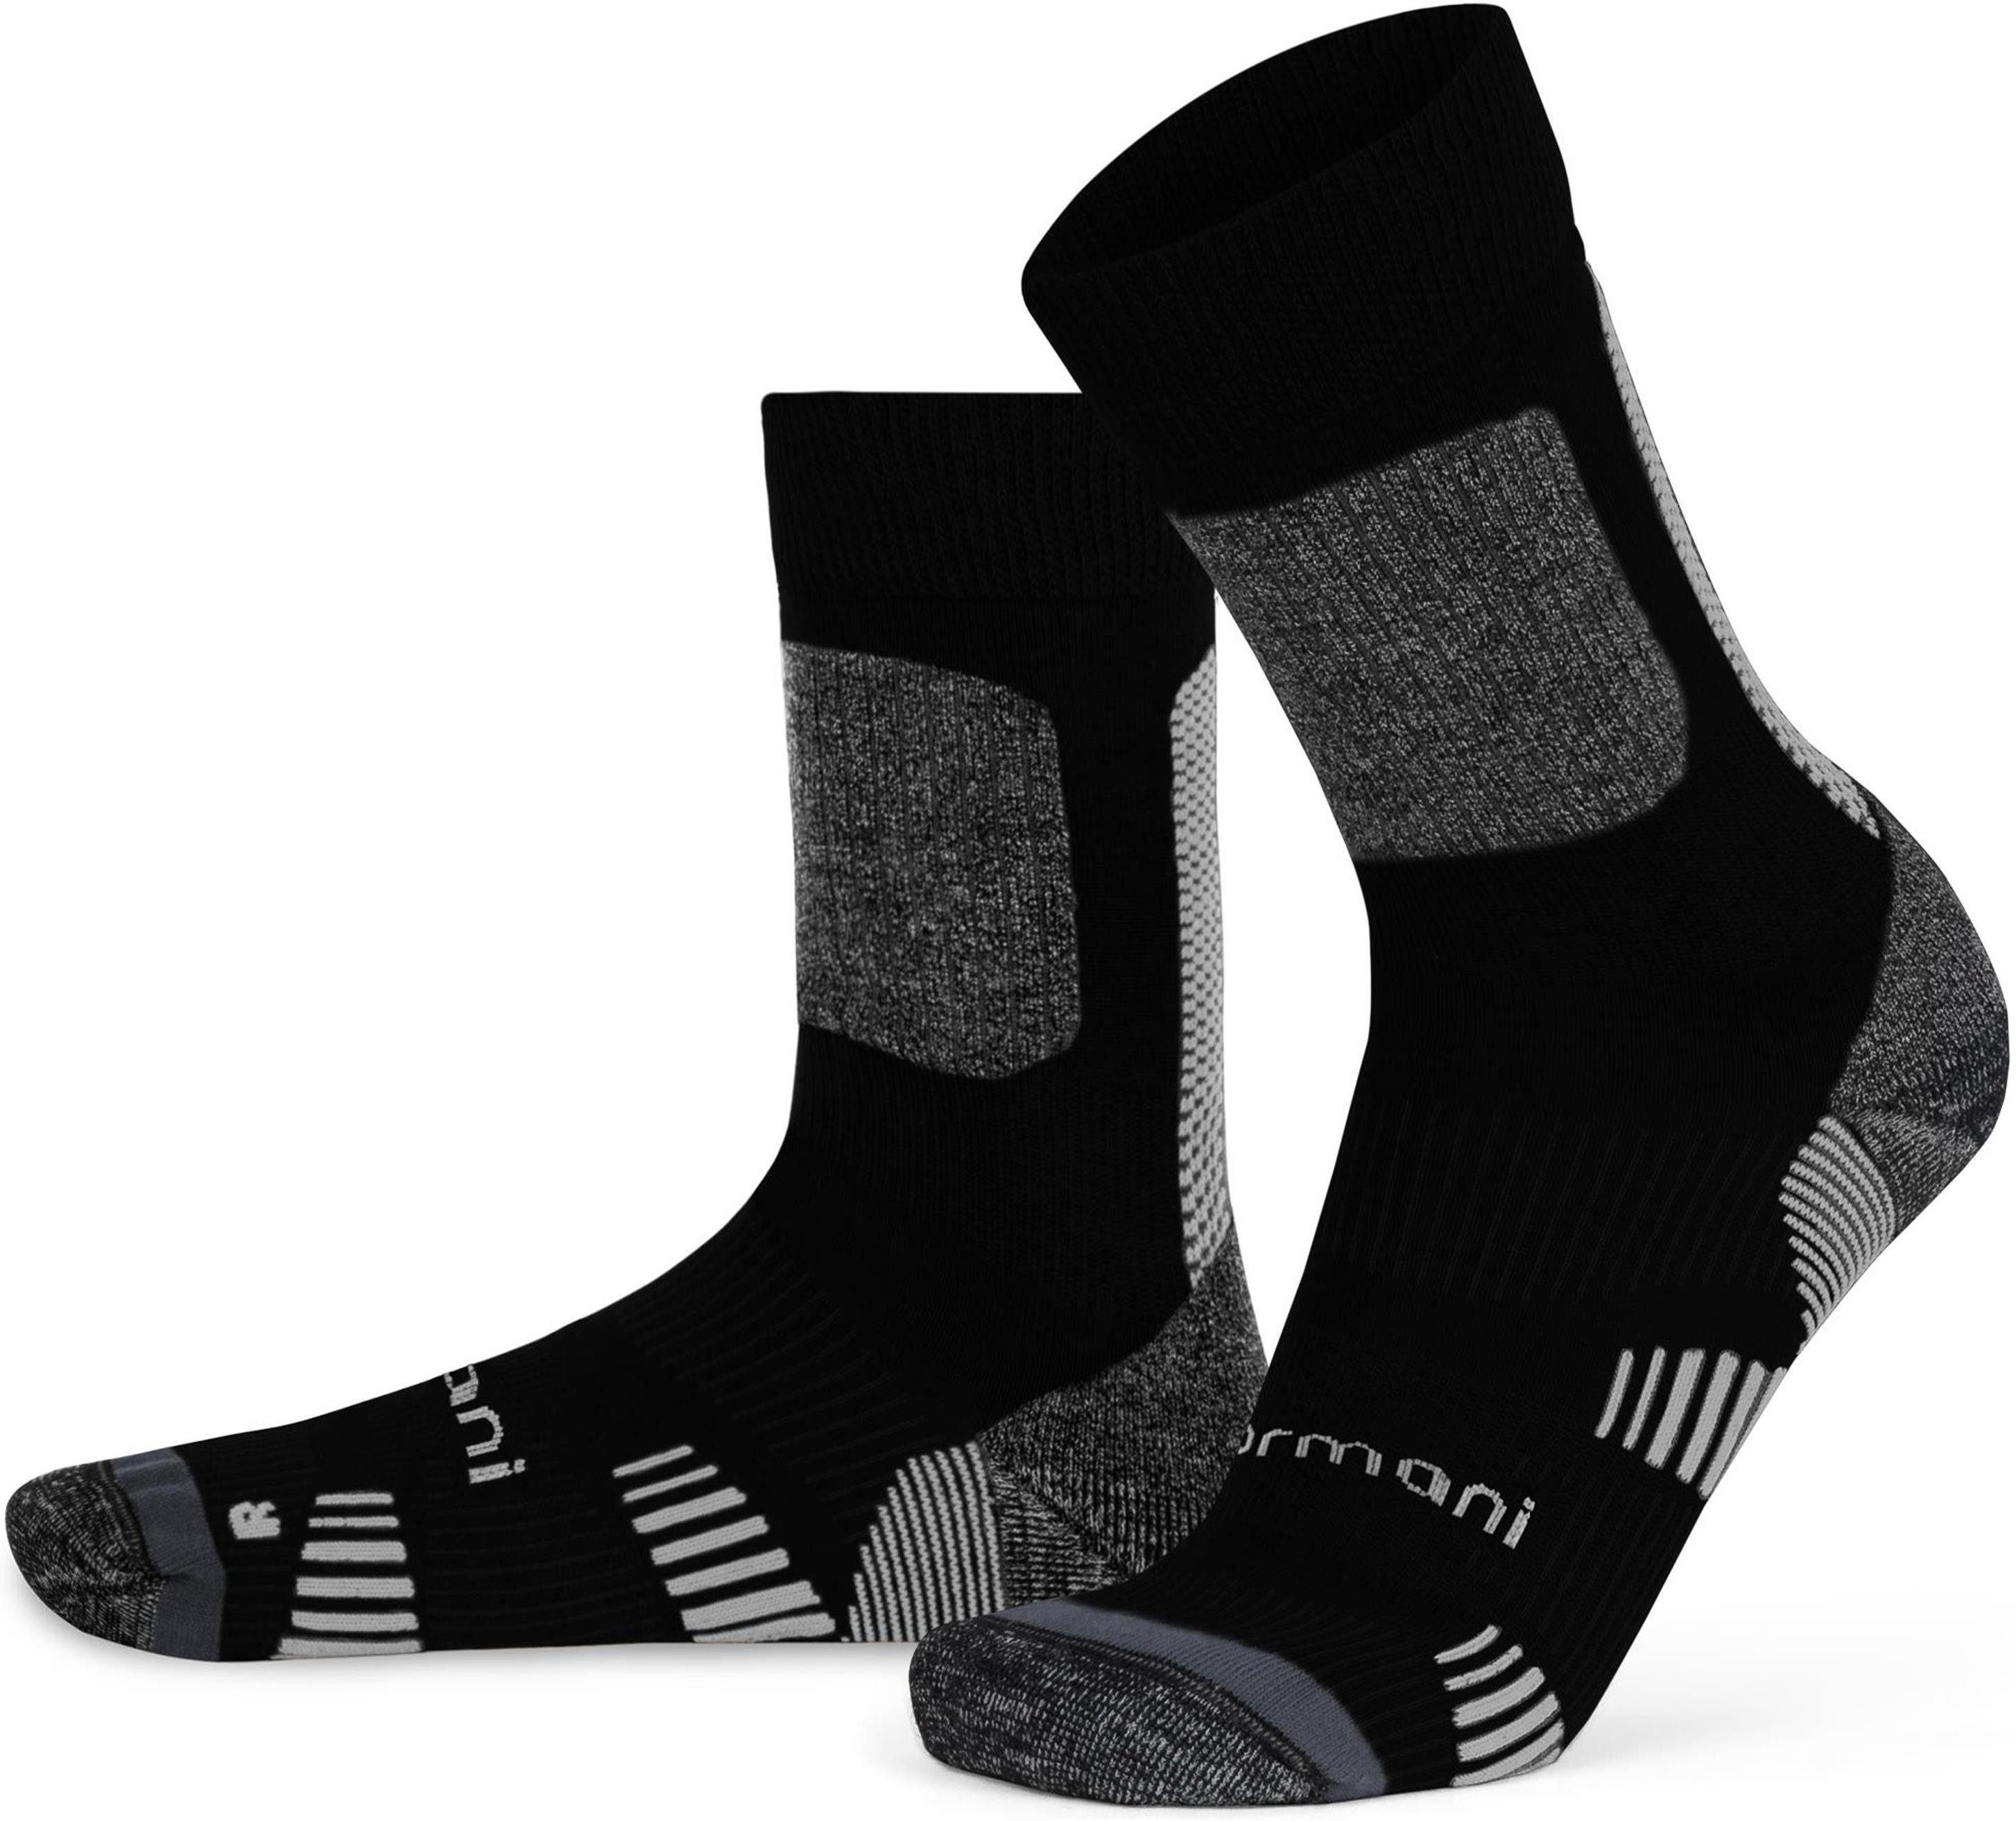 normani Sportsocken 2 Merino Trekking Socken mit Frotteesohle (2 Paar) hochwertige Merinowolle Schwarz